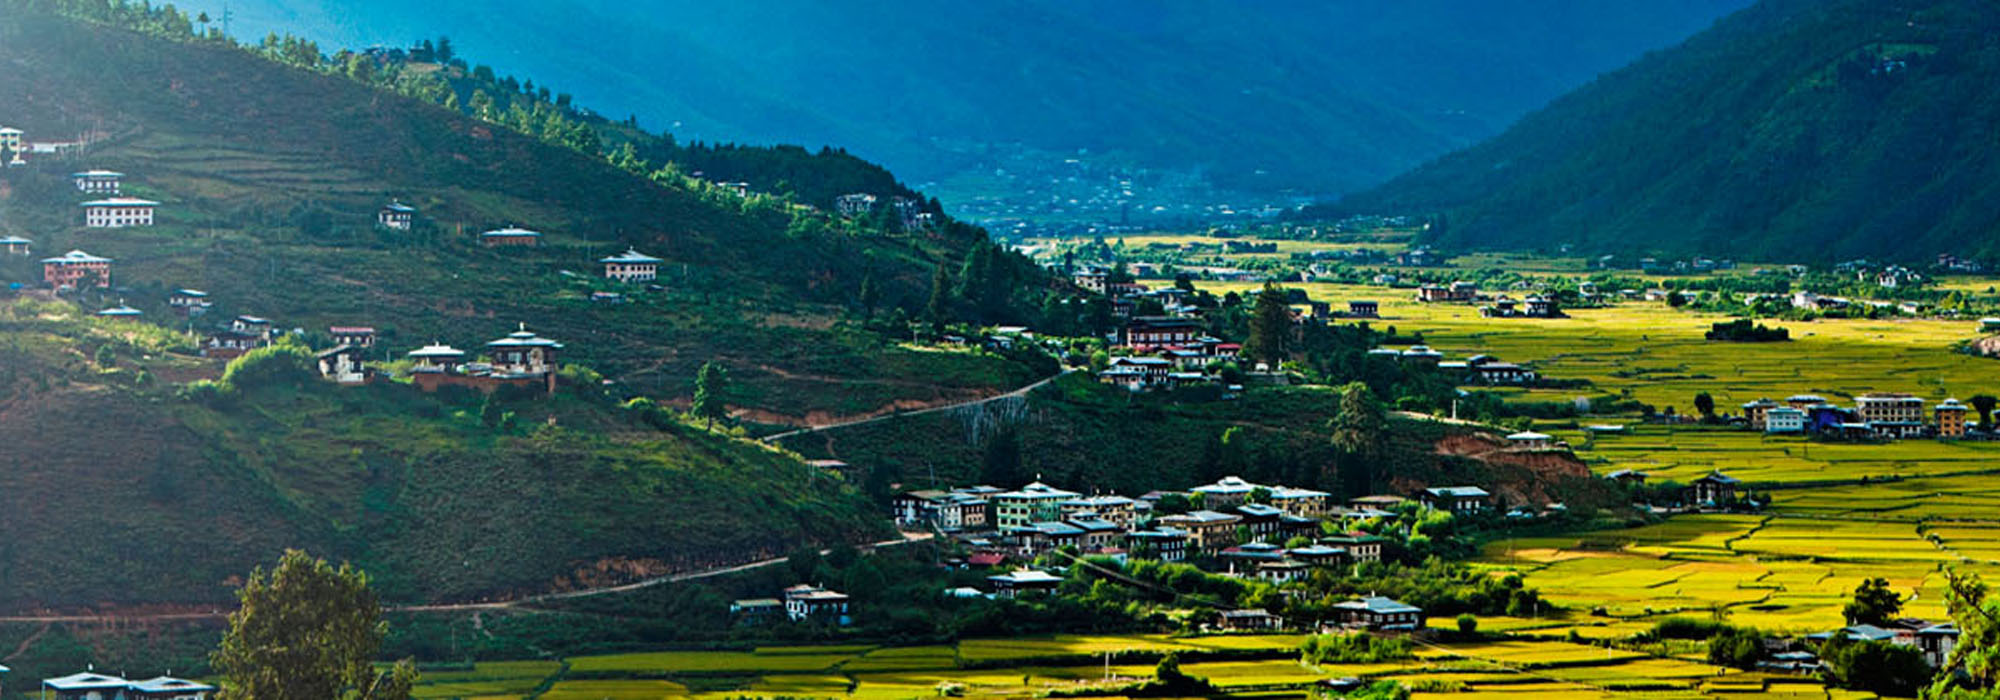 Landscape of Bhutan